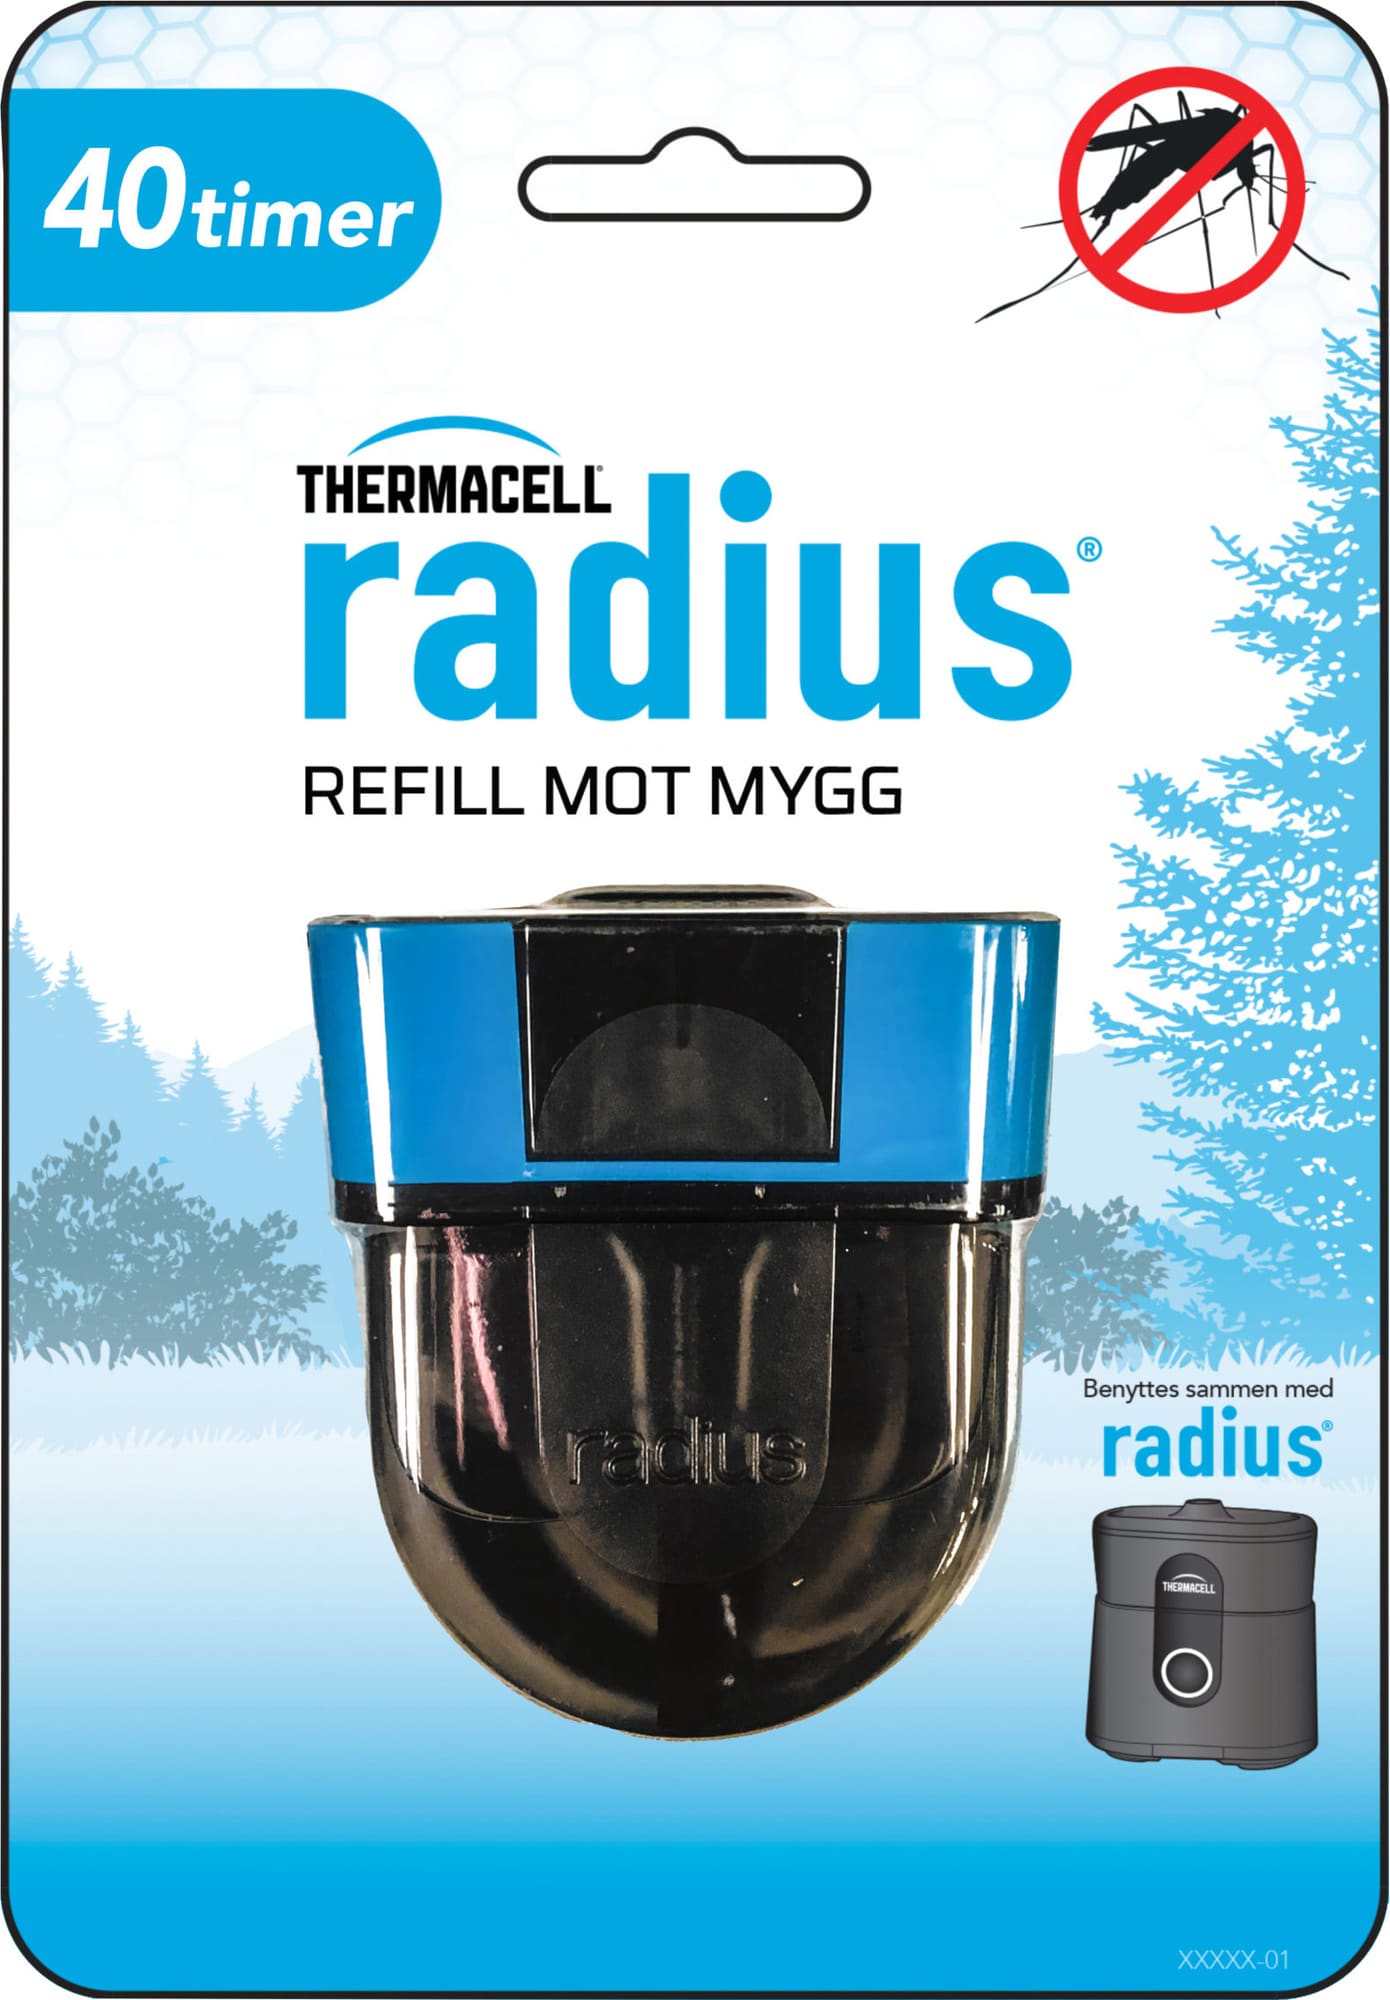 ThermaCell Radius påfyll til myggjager LR140 - Elkjøp